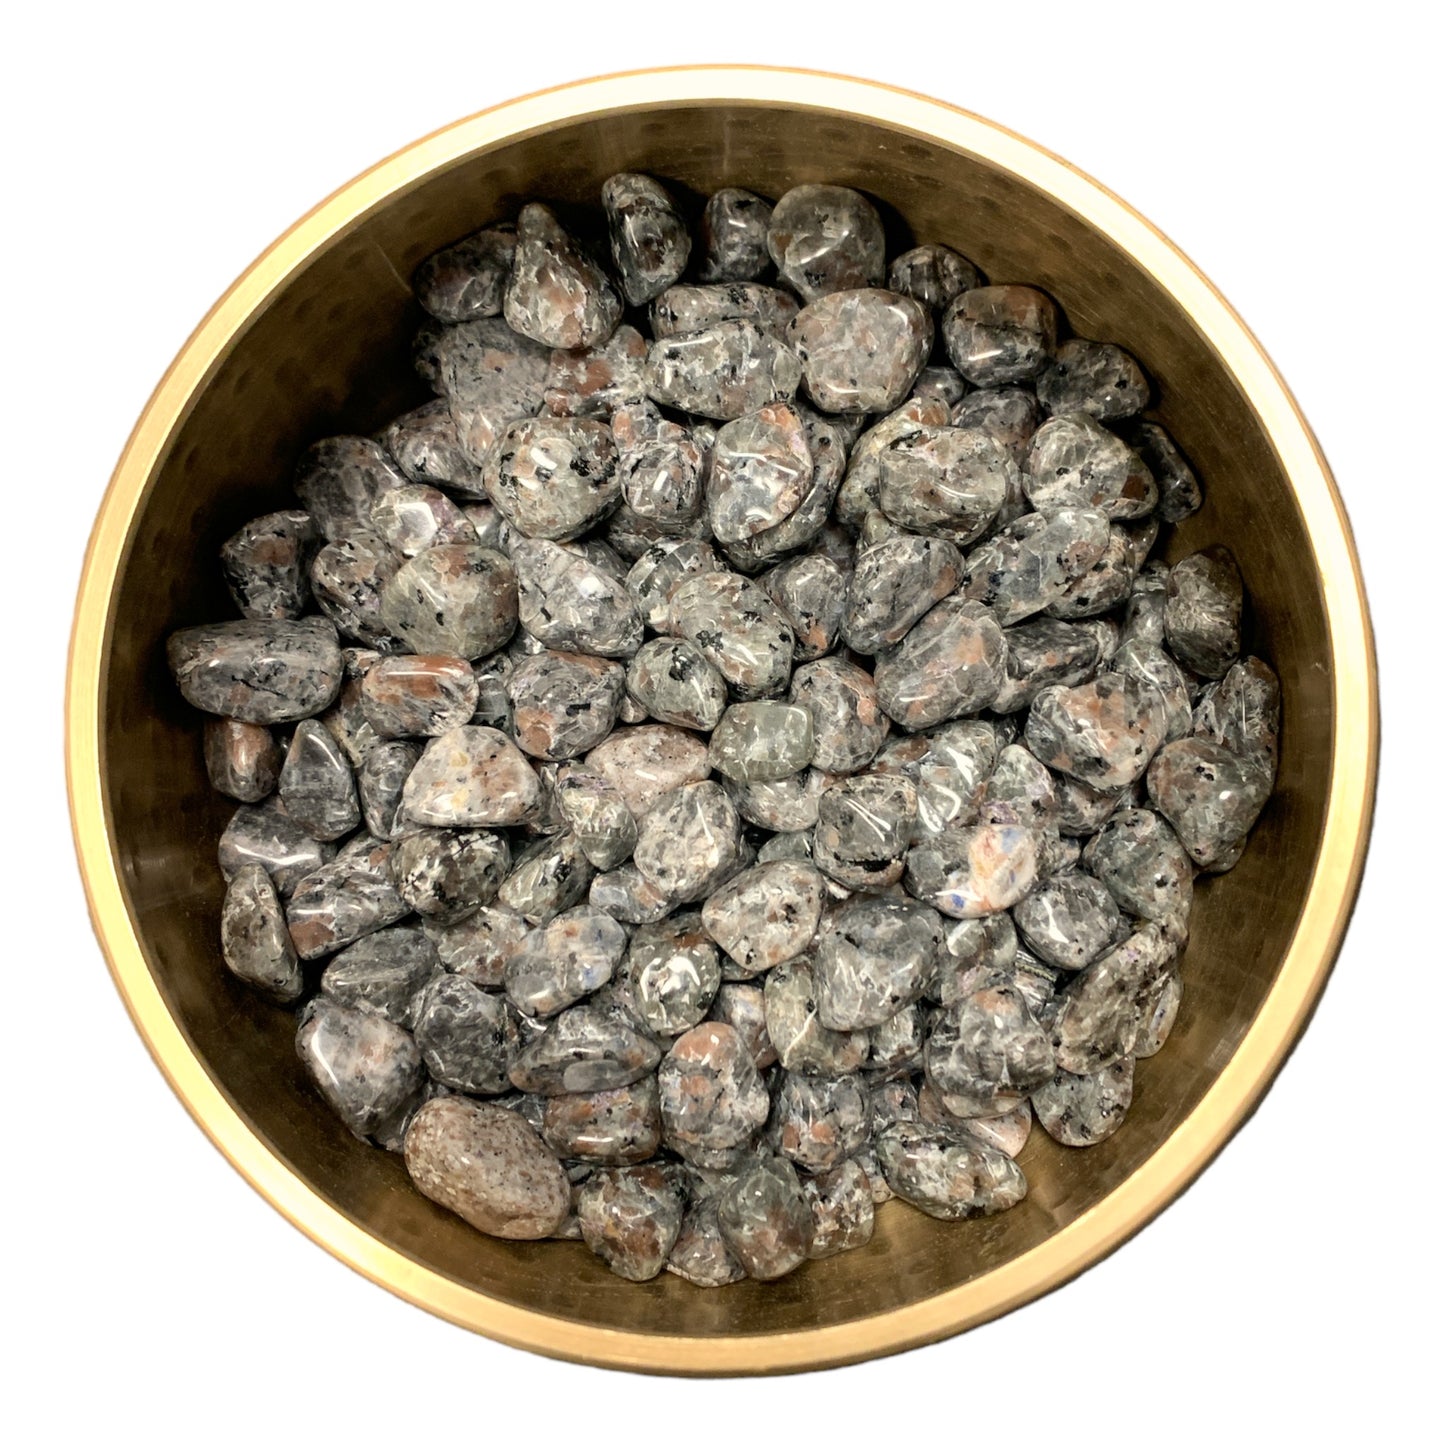 Yooperlite Tumbled Stones - 10 to 20mm Small - 1 LB. - China - NEW922